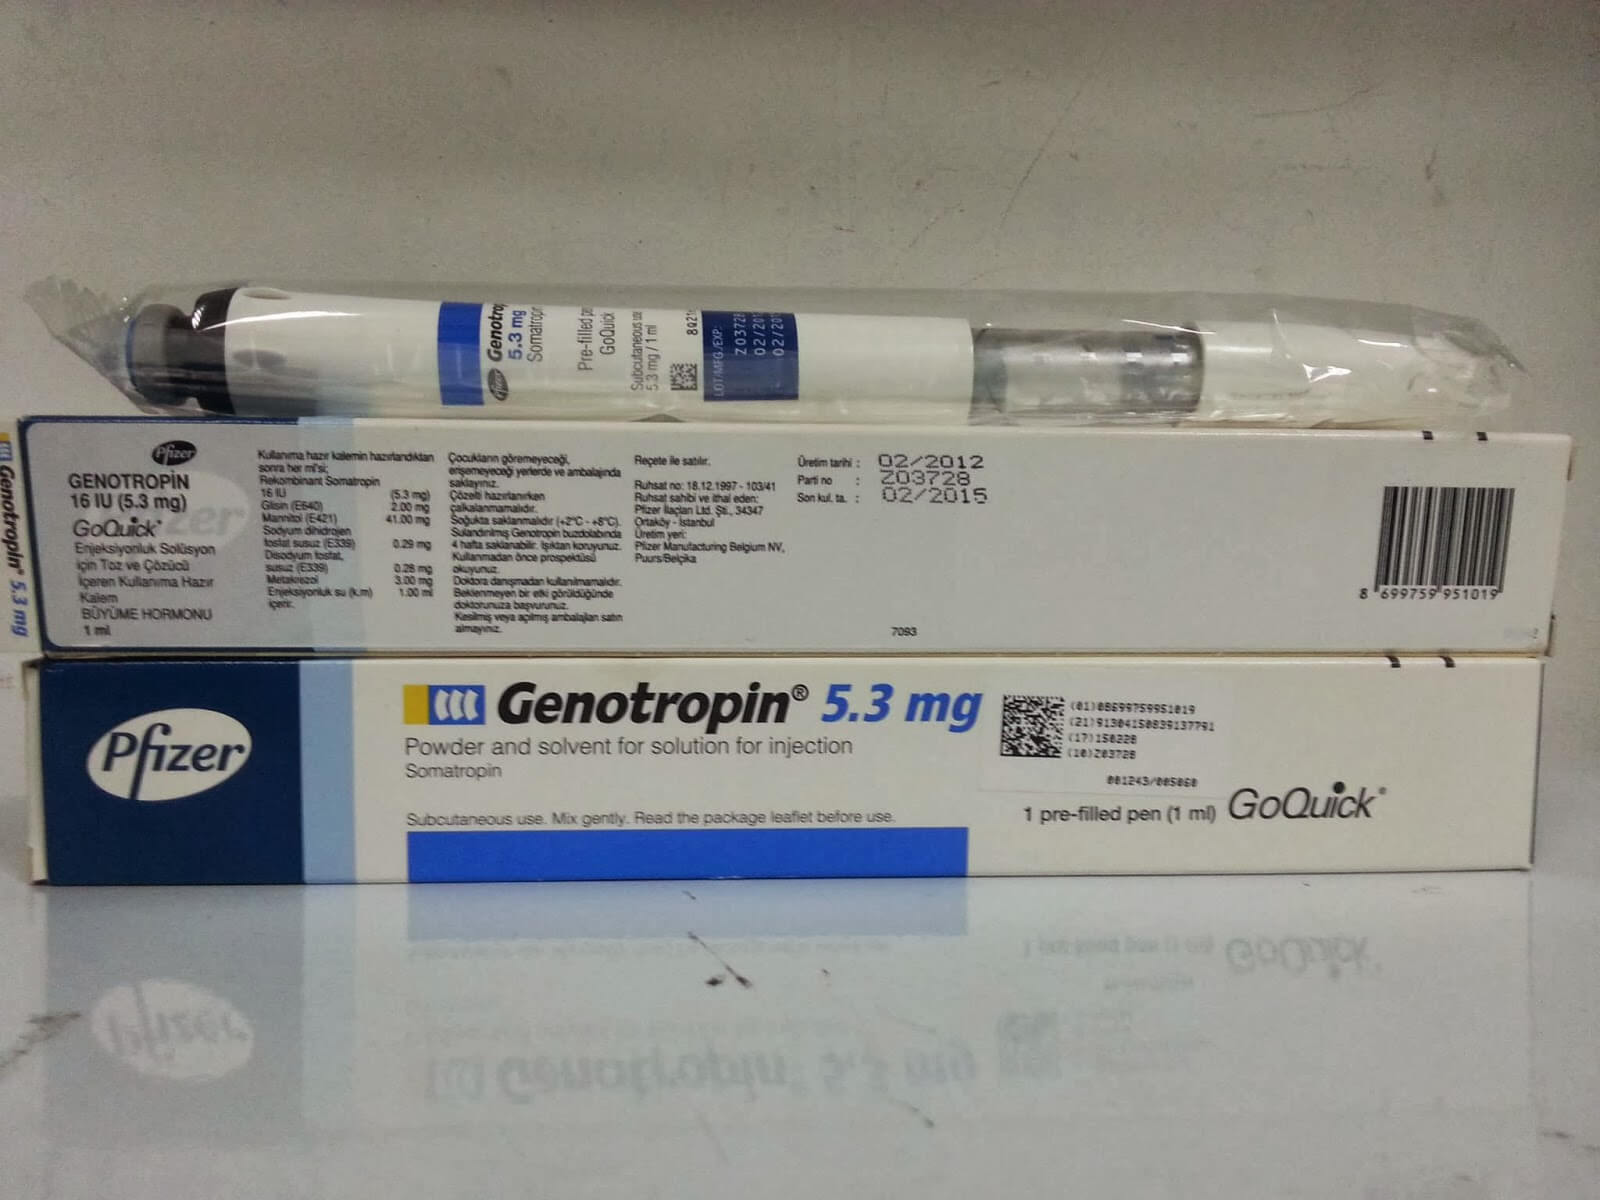 Genotropin 16 IU (5.3 mg) by Pfizer